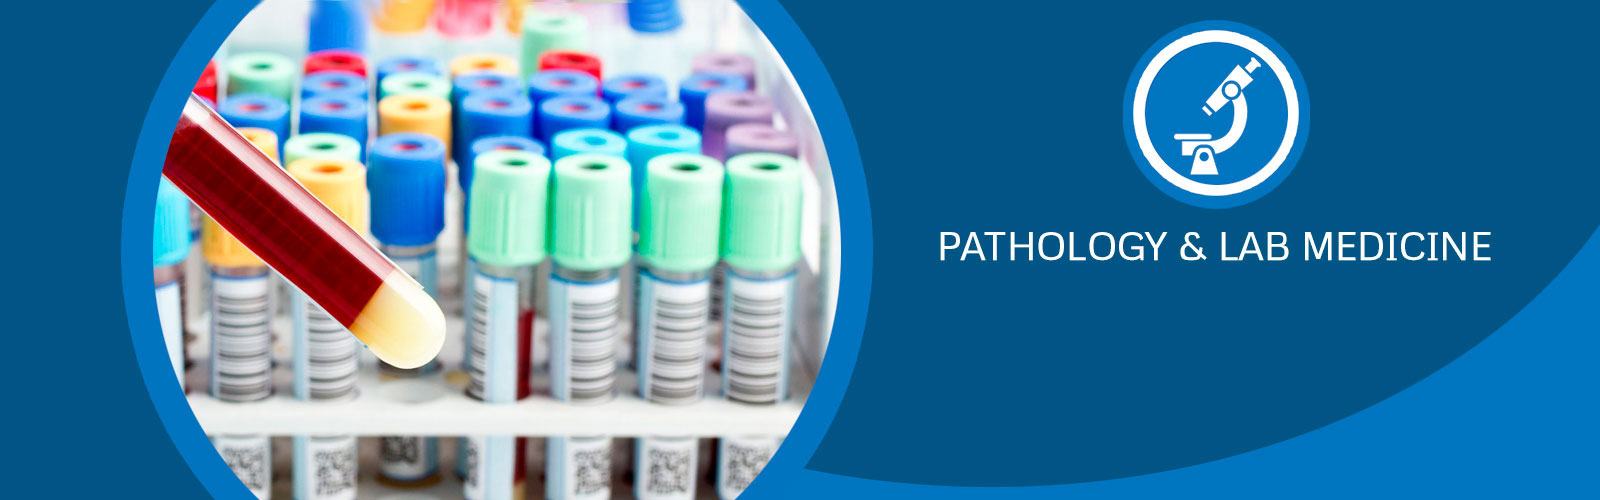 Pathology & Lab Medicine